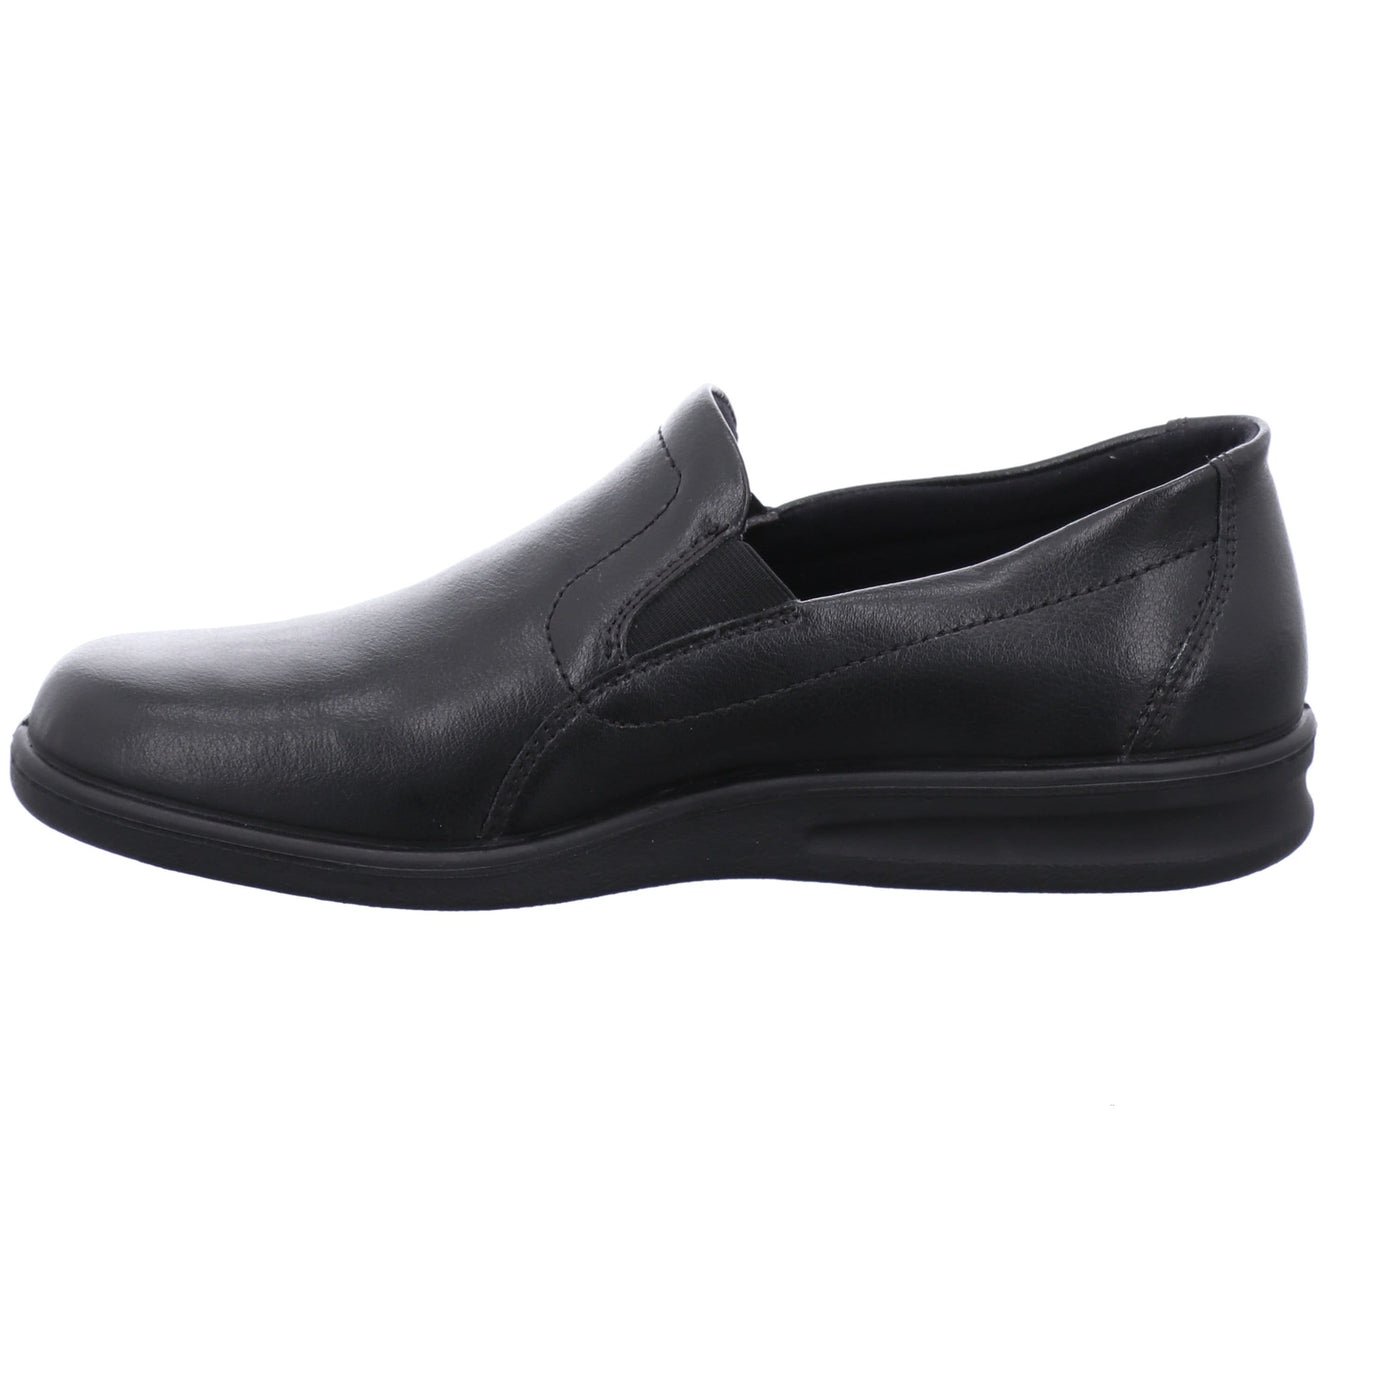 Romika Westland Belfort 88 | Chaussures confortables - Pantoufles homme